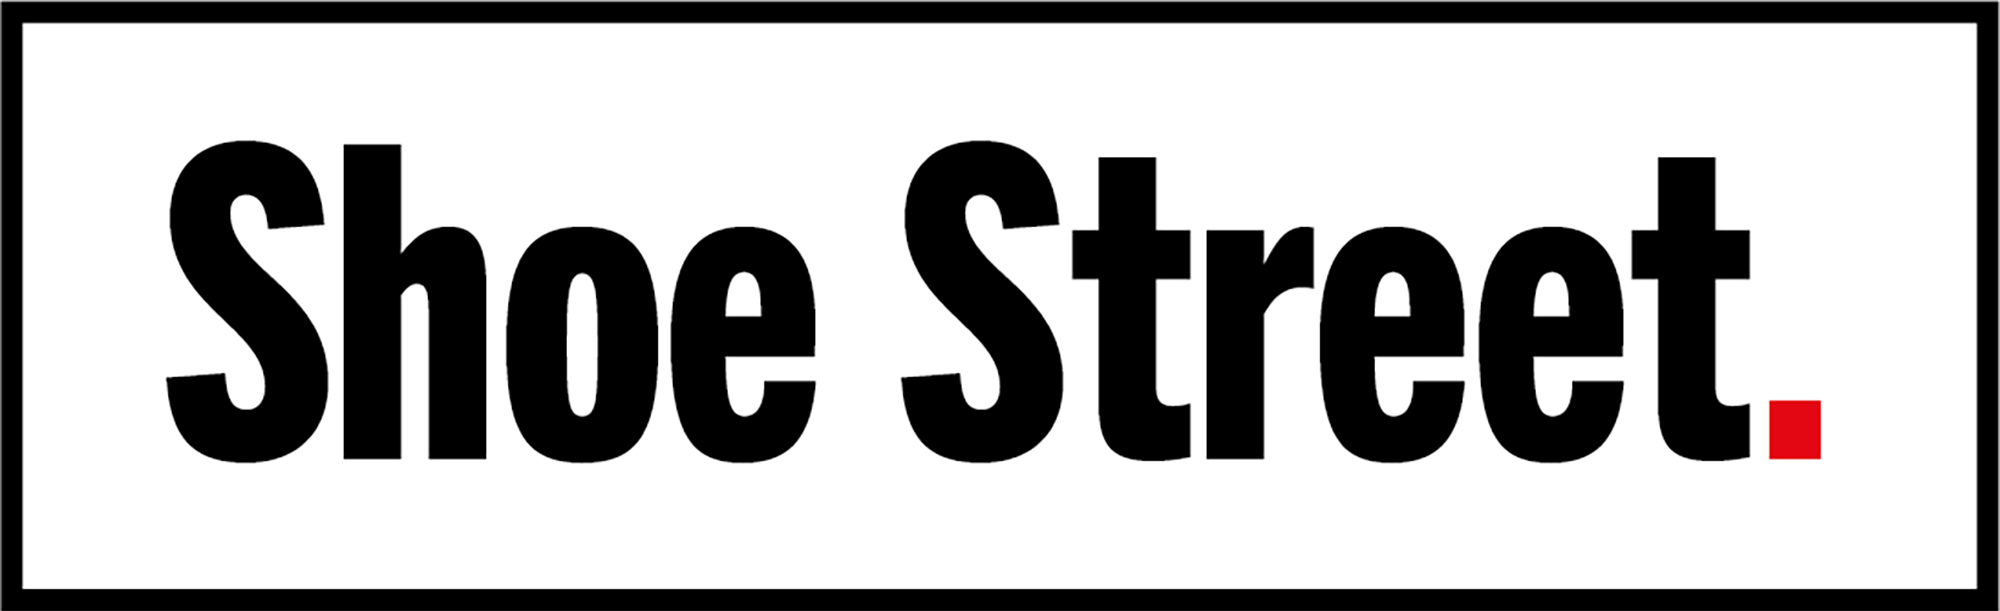 shoestreet.co.uk